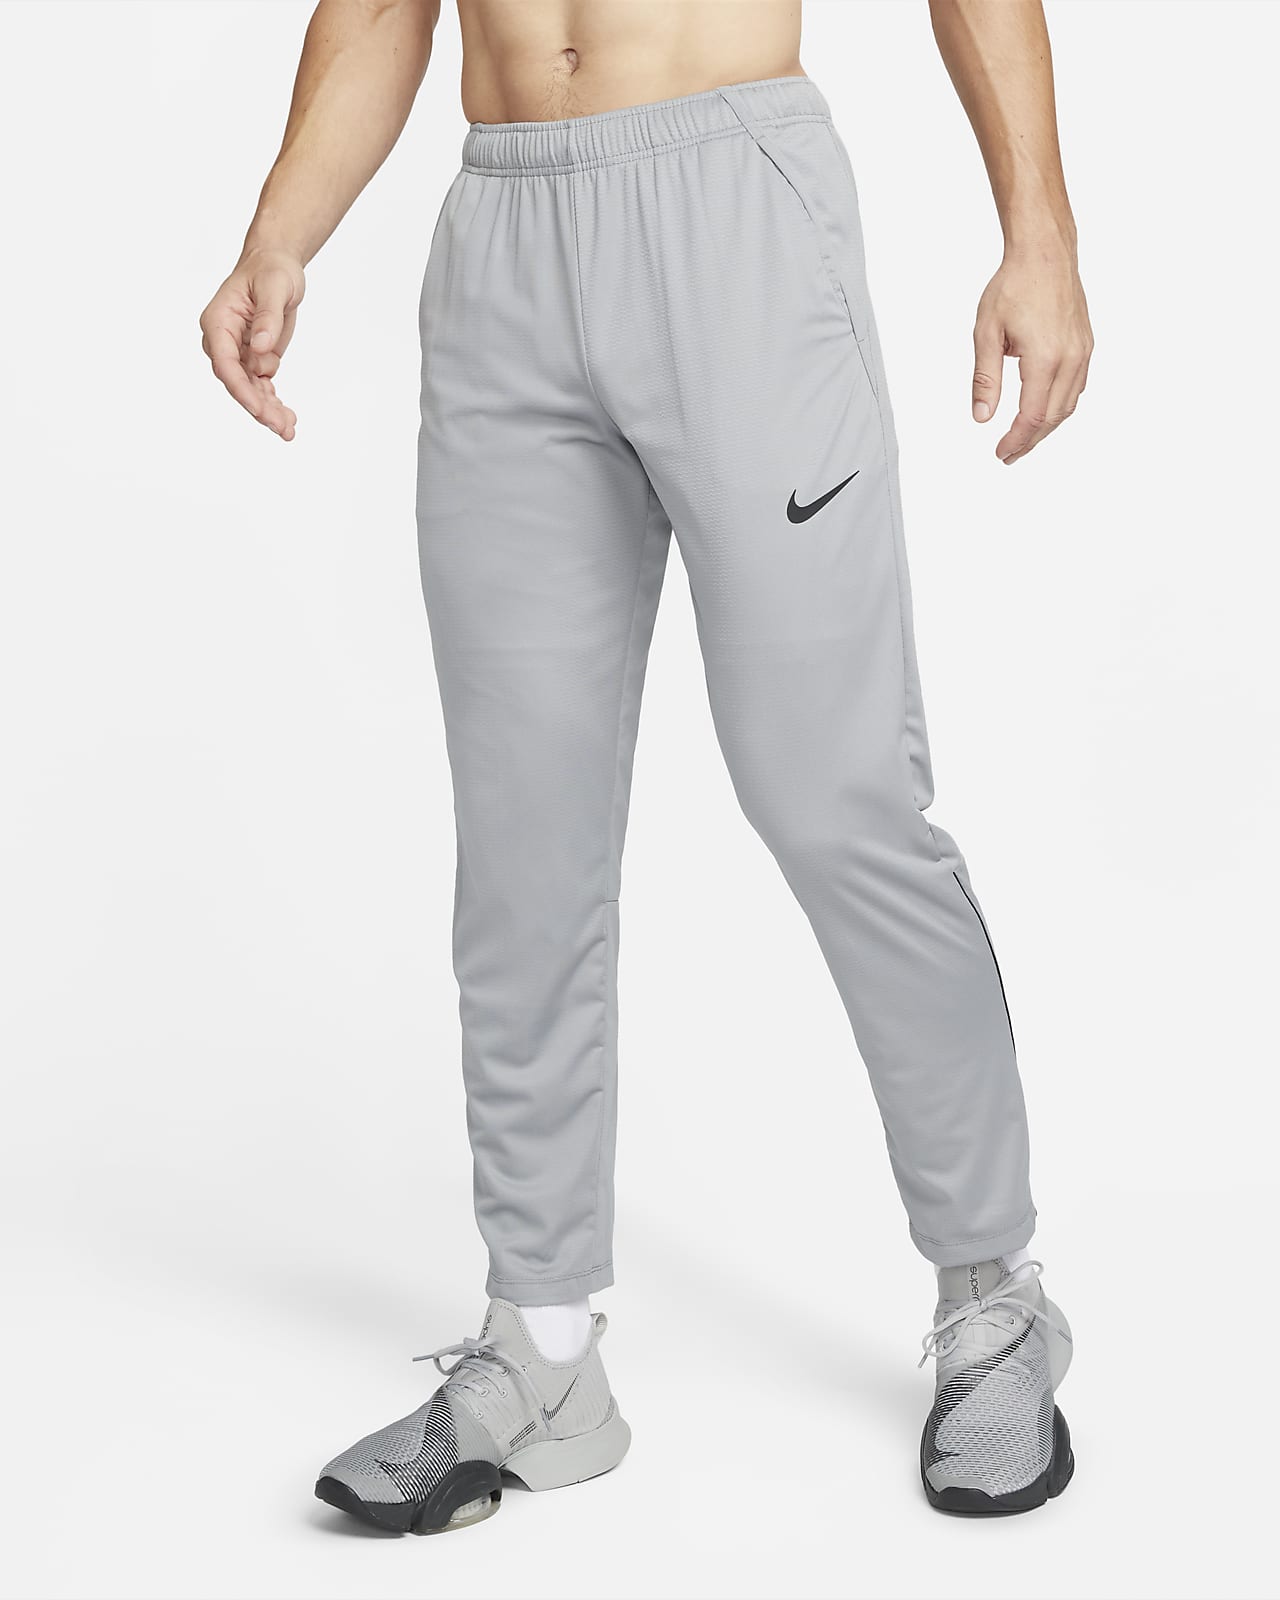 Nike Pants Mens Extra Large Gray Pro Drifit Compression Training Trainer  30X25  Full On Cinema